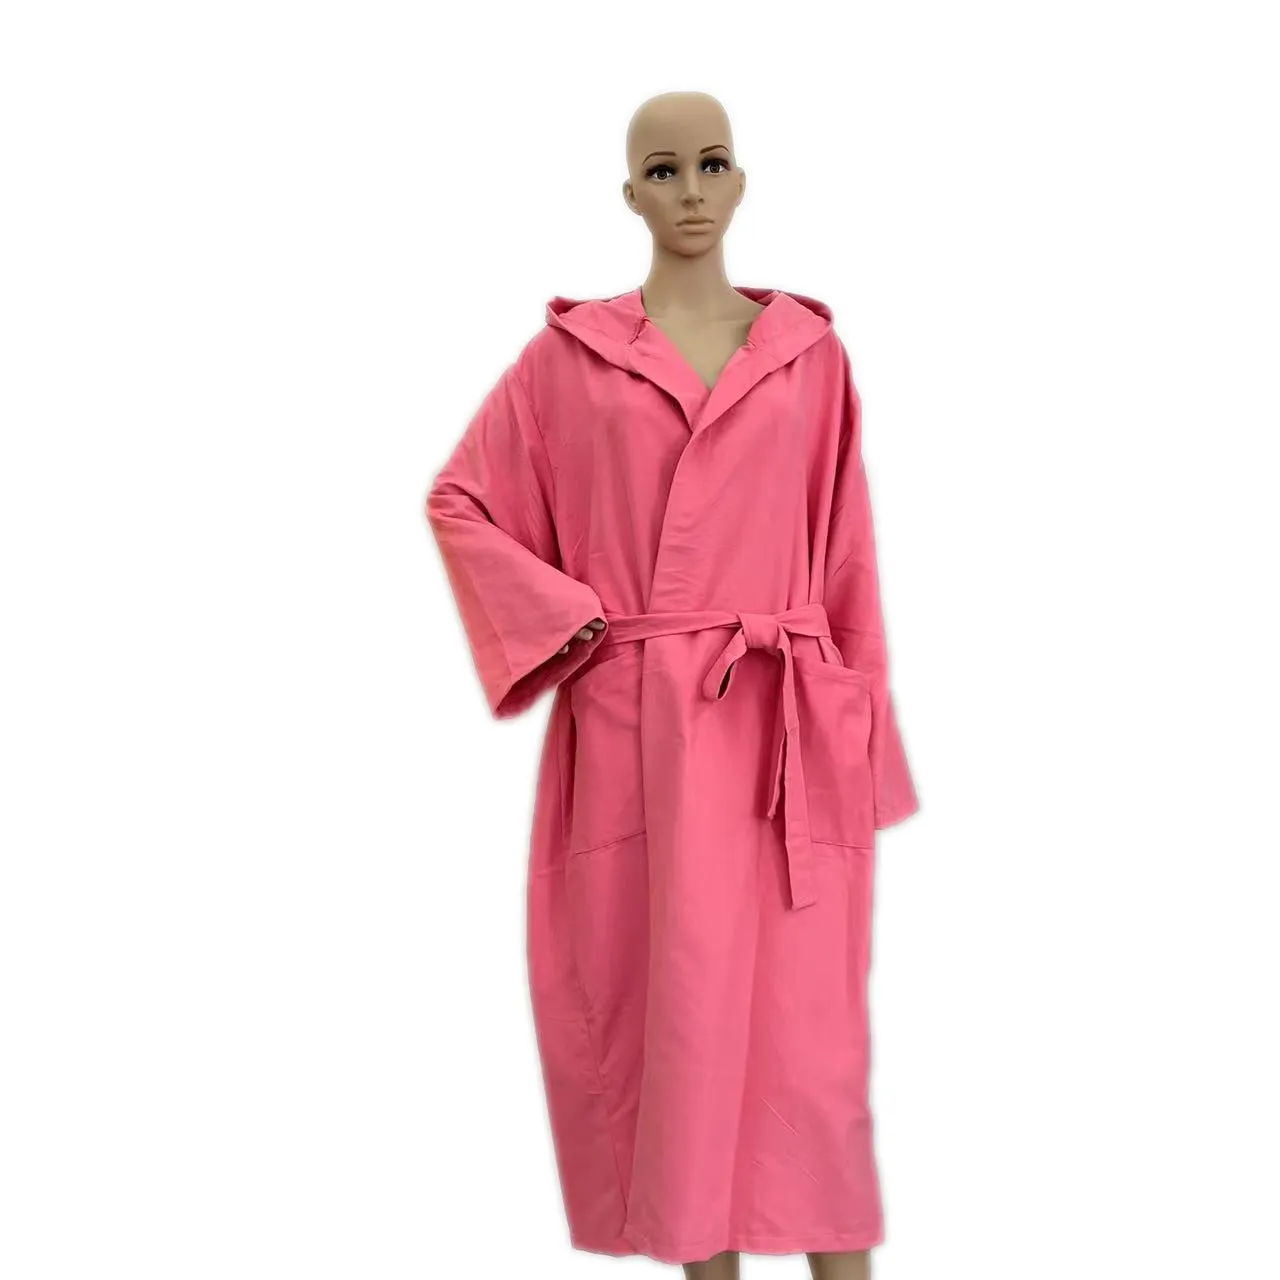 Cheap Hotel Bathrobe Spa Robes Wholesale Colourfast Microfiber Polyester Robe